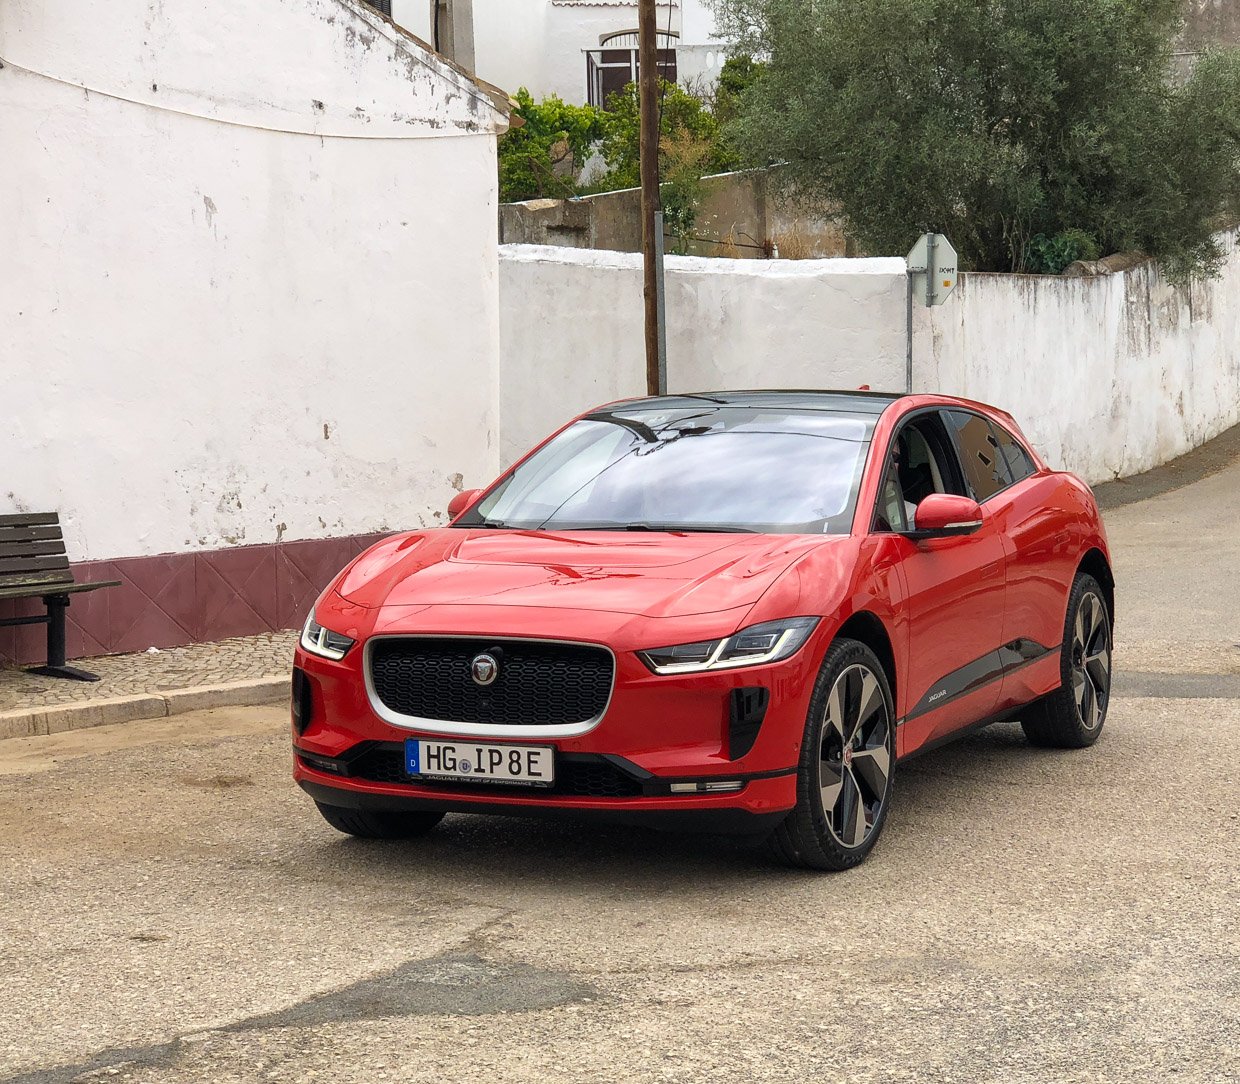 2019 Jaguar I-PACE First Drive Review: Electric Dreams Come True